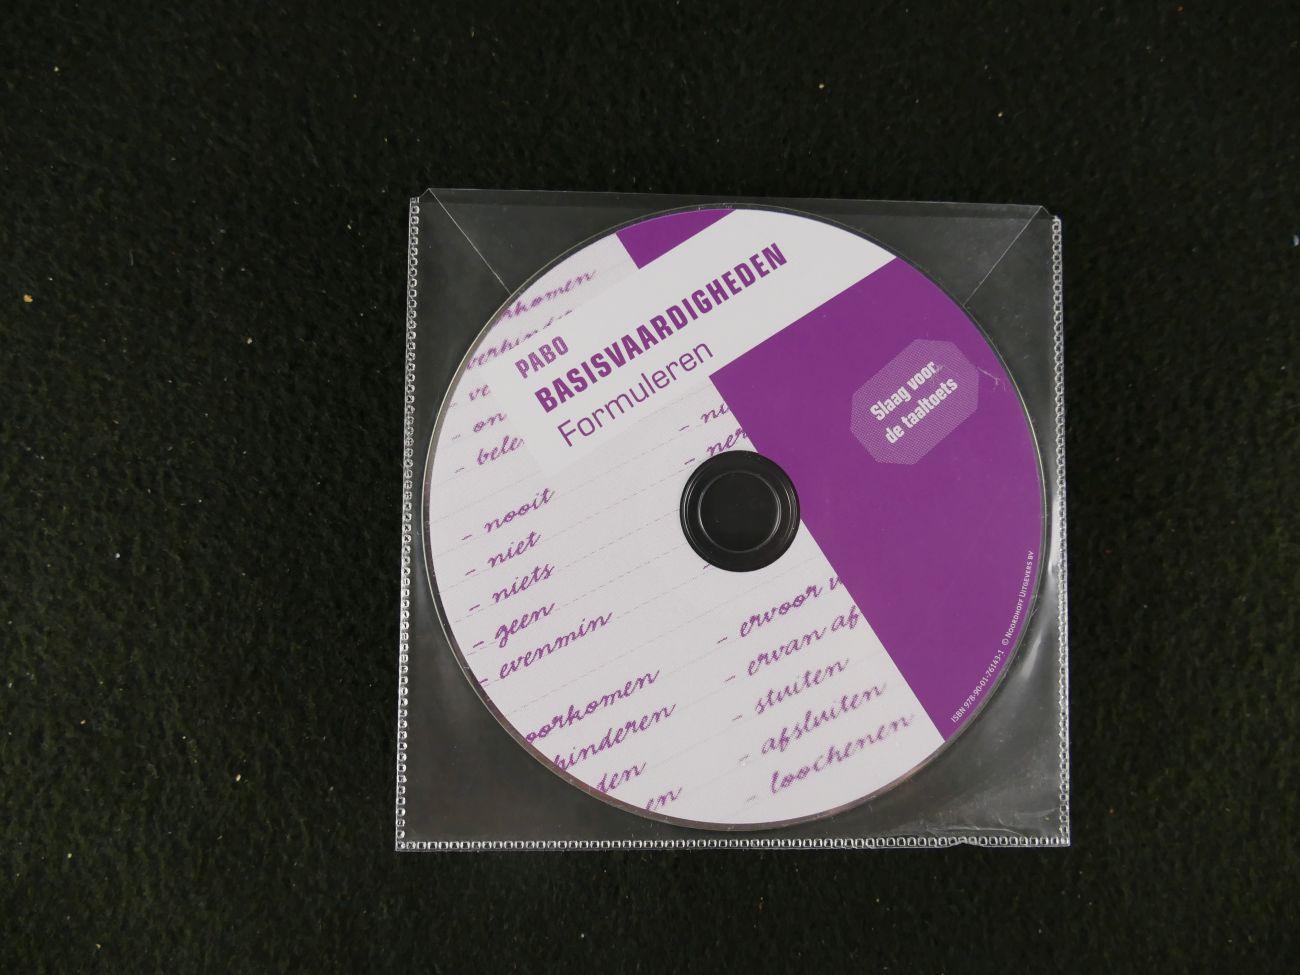 Christian, F. & Brouwer, A. - Basisvaardigheden Formuleren + cd-rom. (3 foto's)